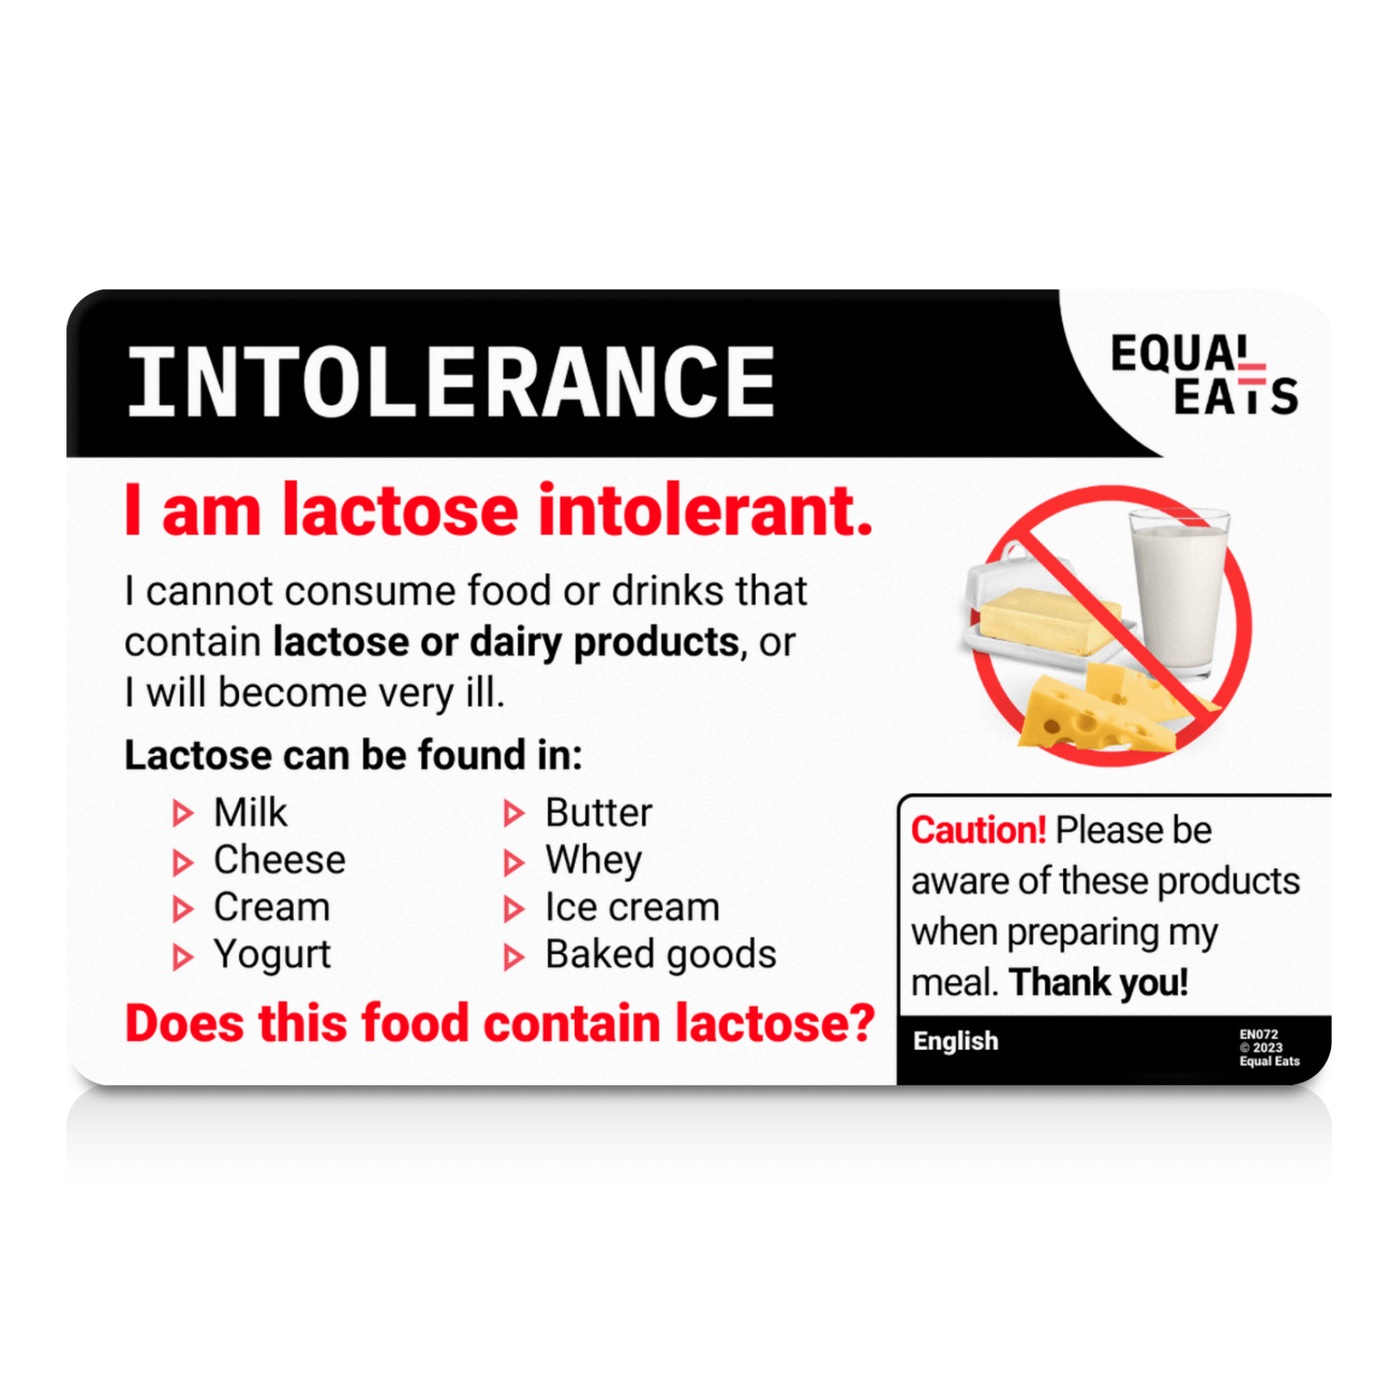 Indonesian Lactose Intolerance Card